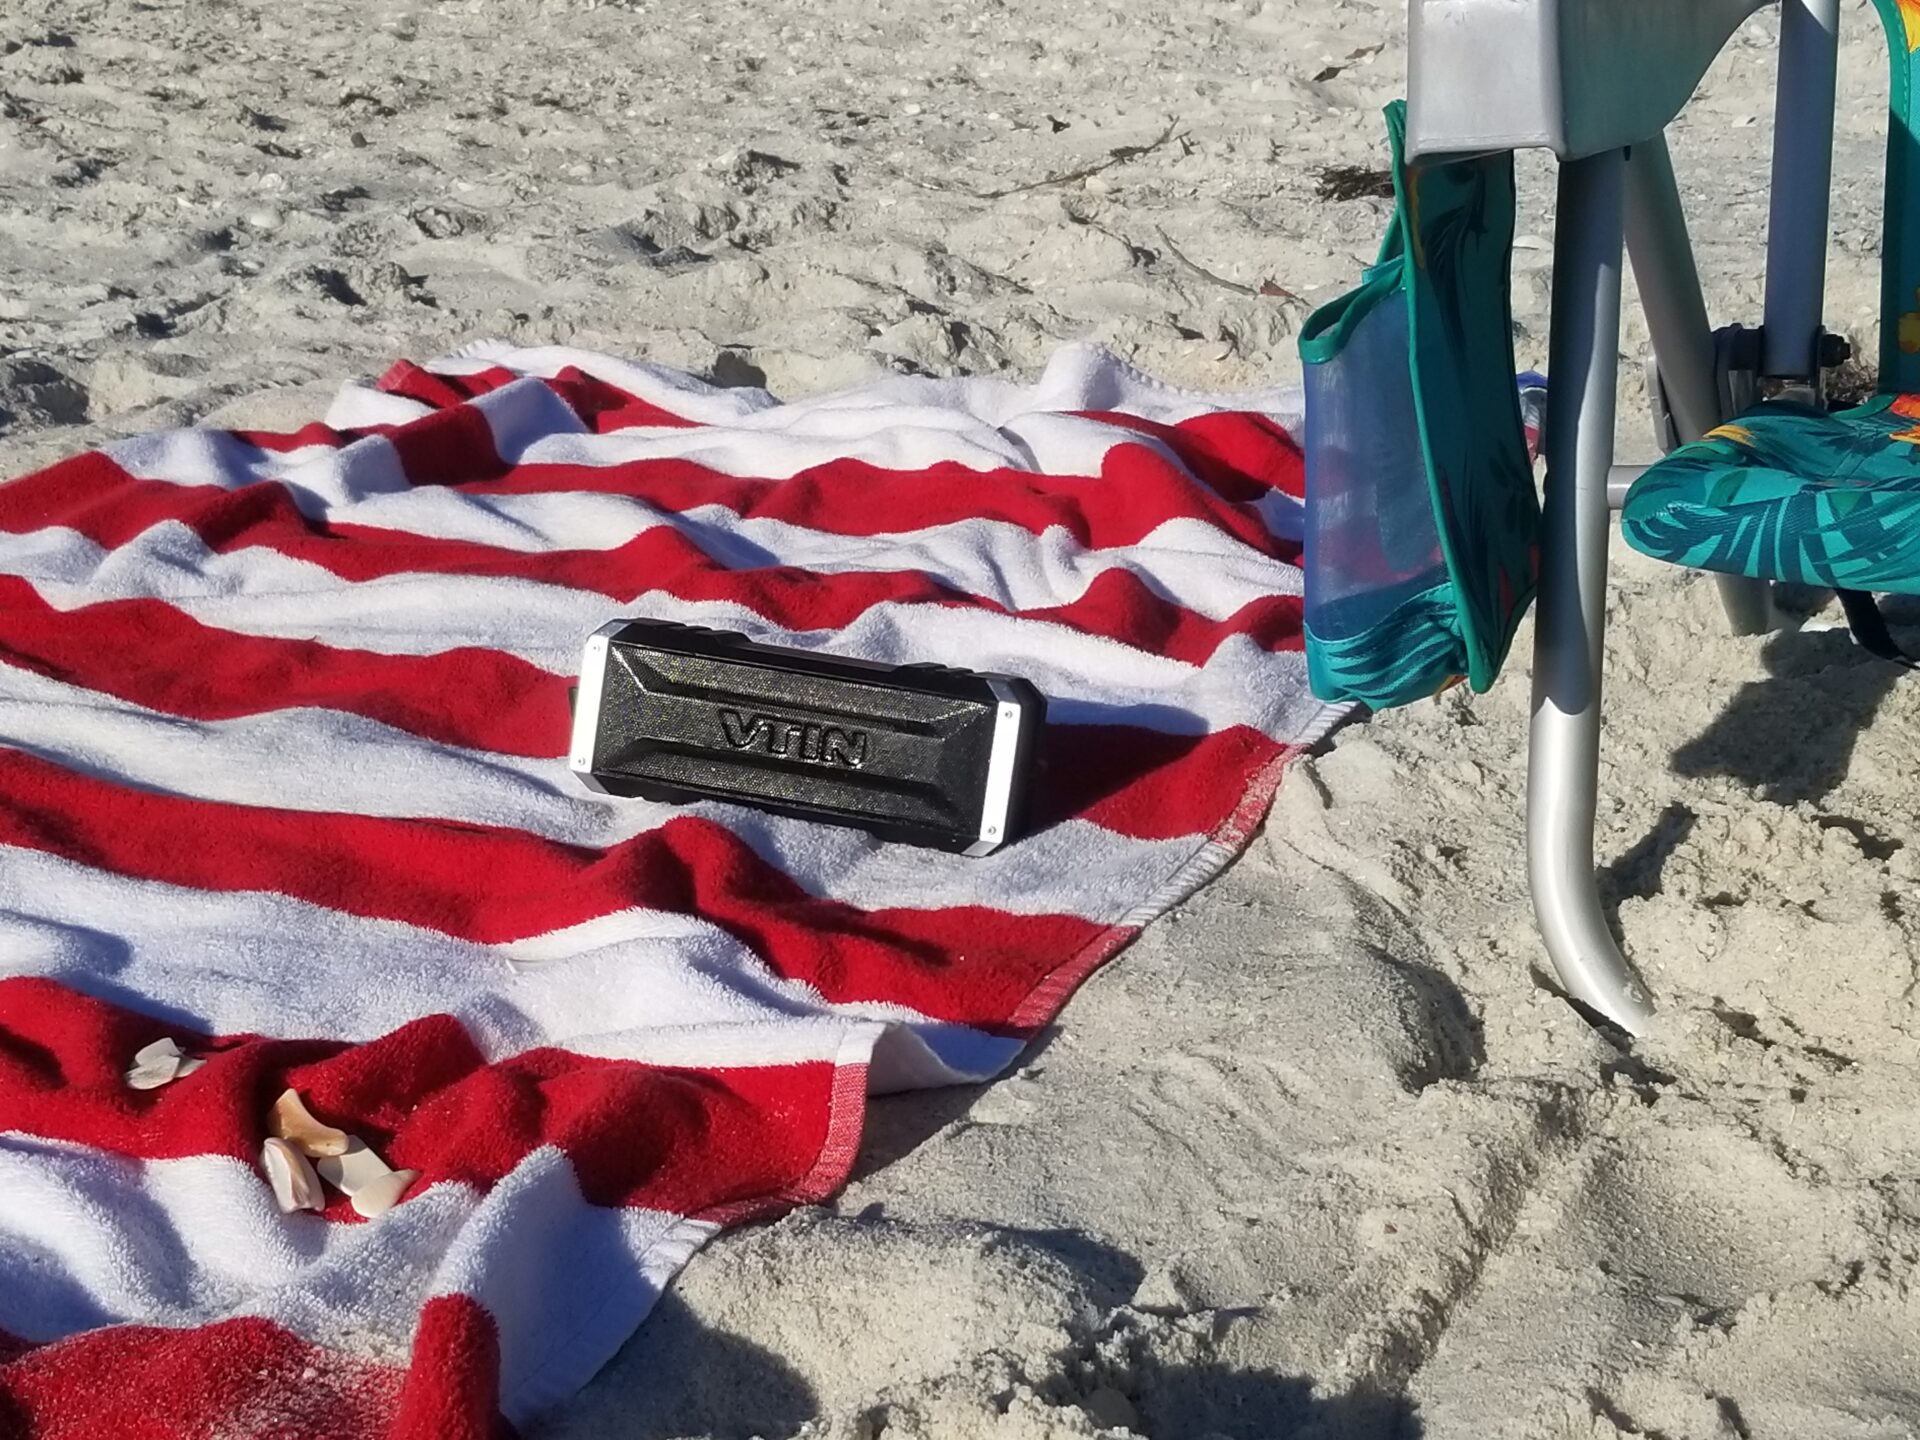 rectangular portable speaker on striped beach towel on sandy beach